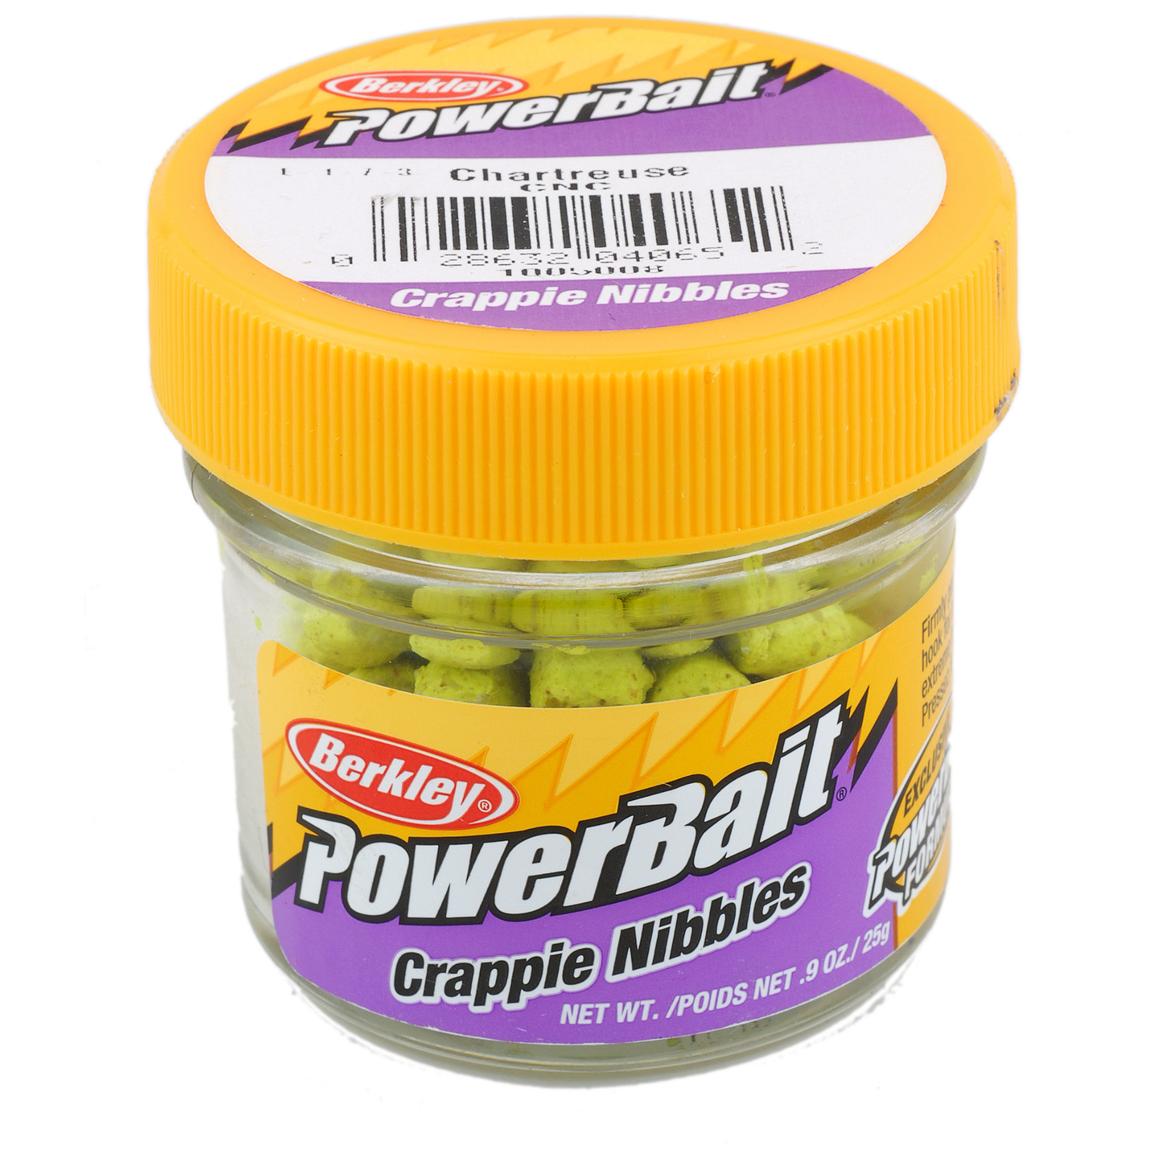 Berkley® Powerbait® Crappie Nibble Bait 11 Oz Jar 425051 Soft Baits At Sportsmans Guide 